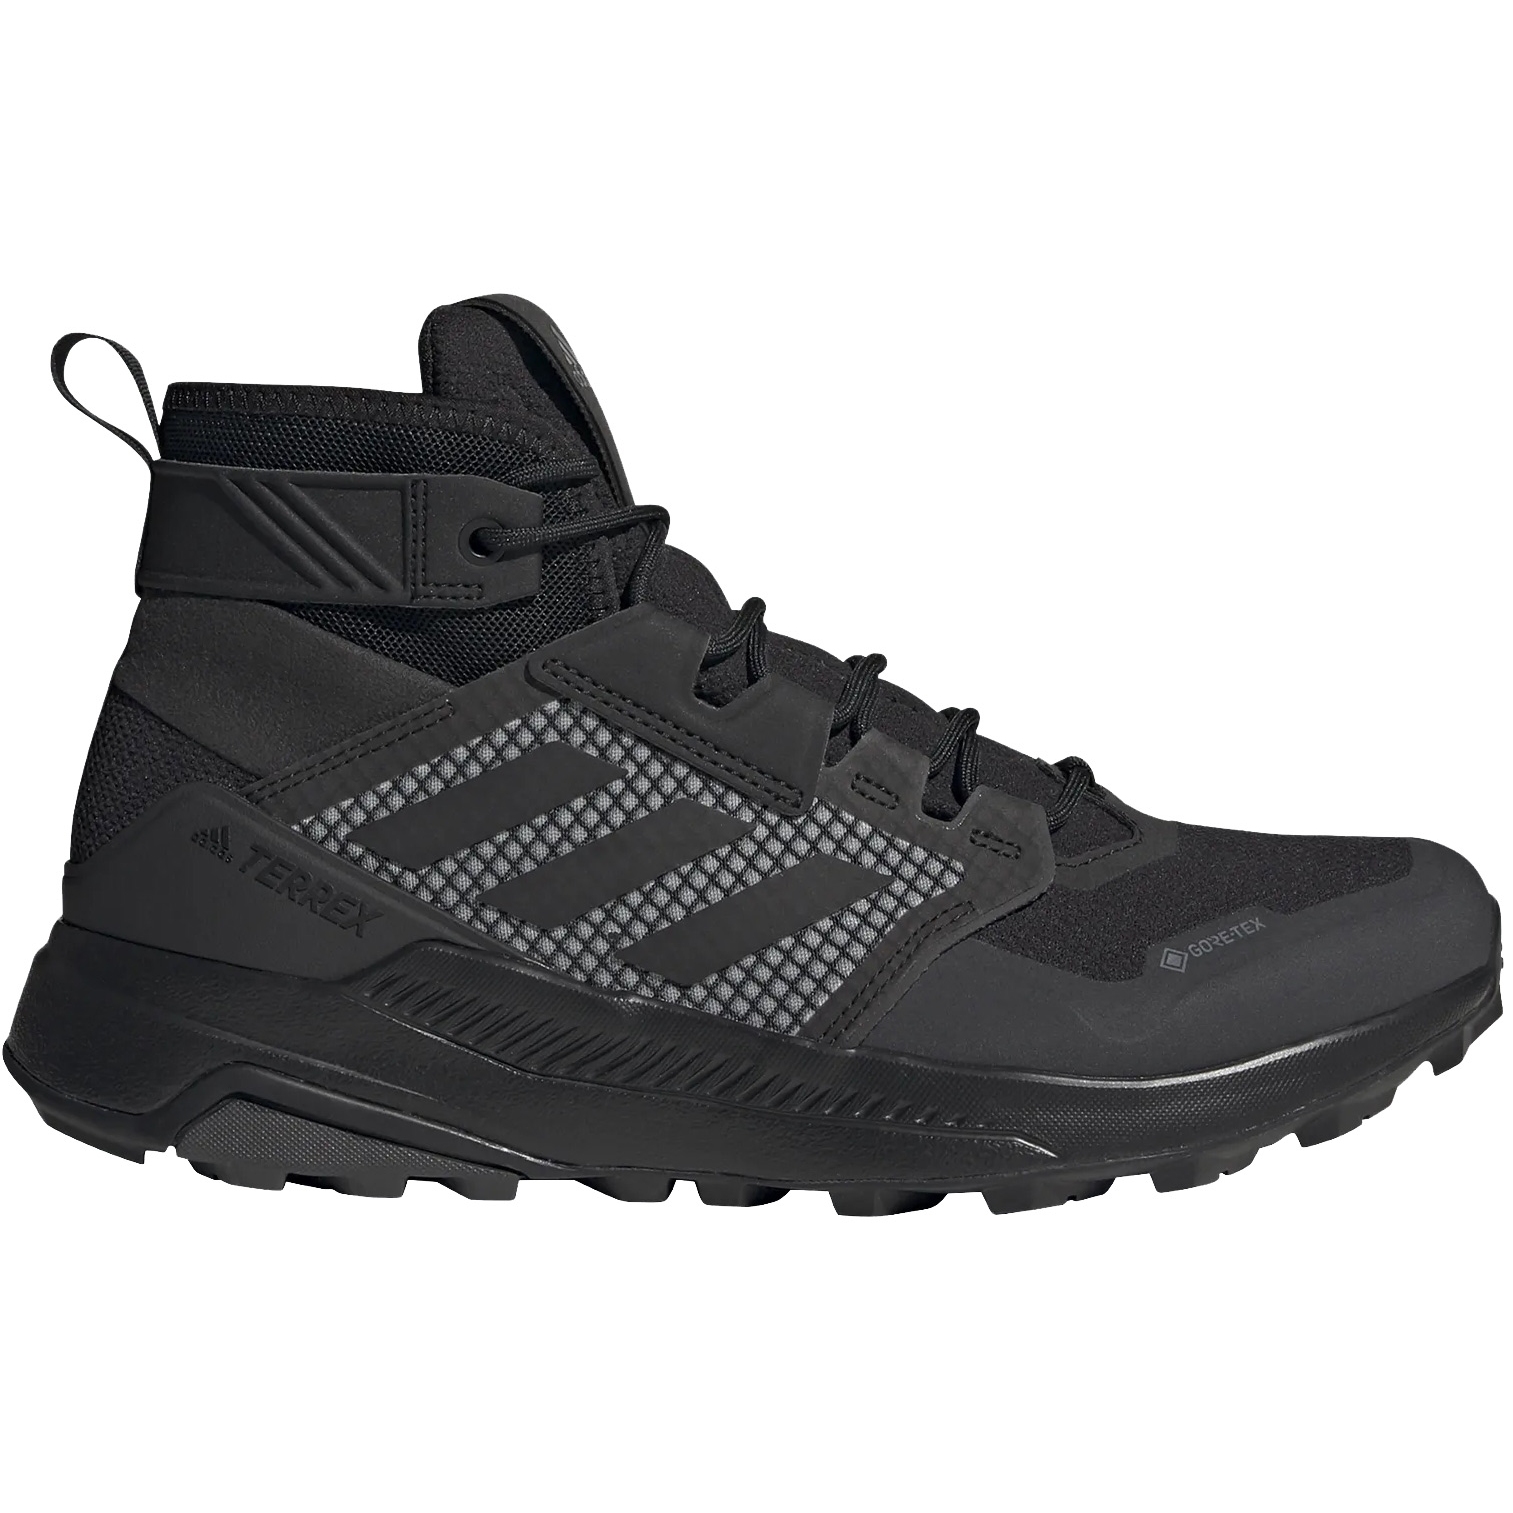 Image of adidas Men's TERREX Trailmaker Mid GORE-TEX Hiking Shoes - core black/core black/dgh solid grey FY2229